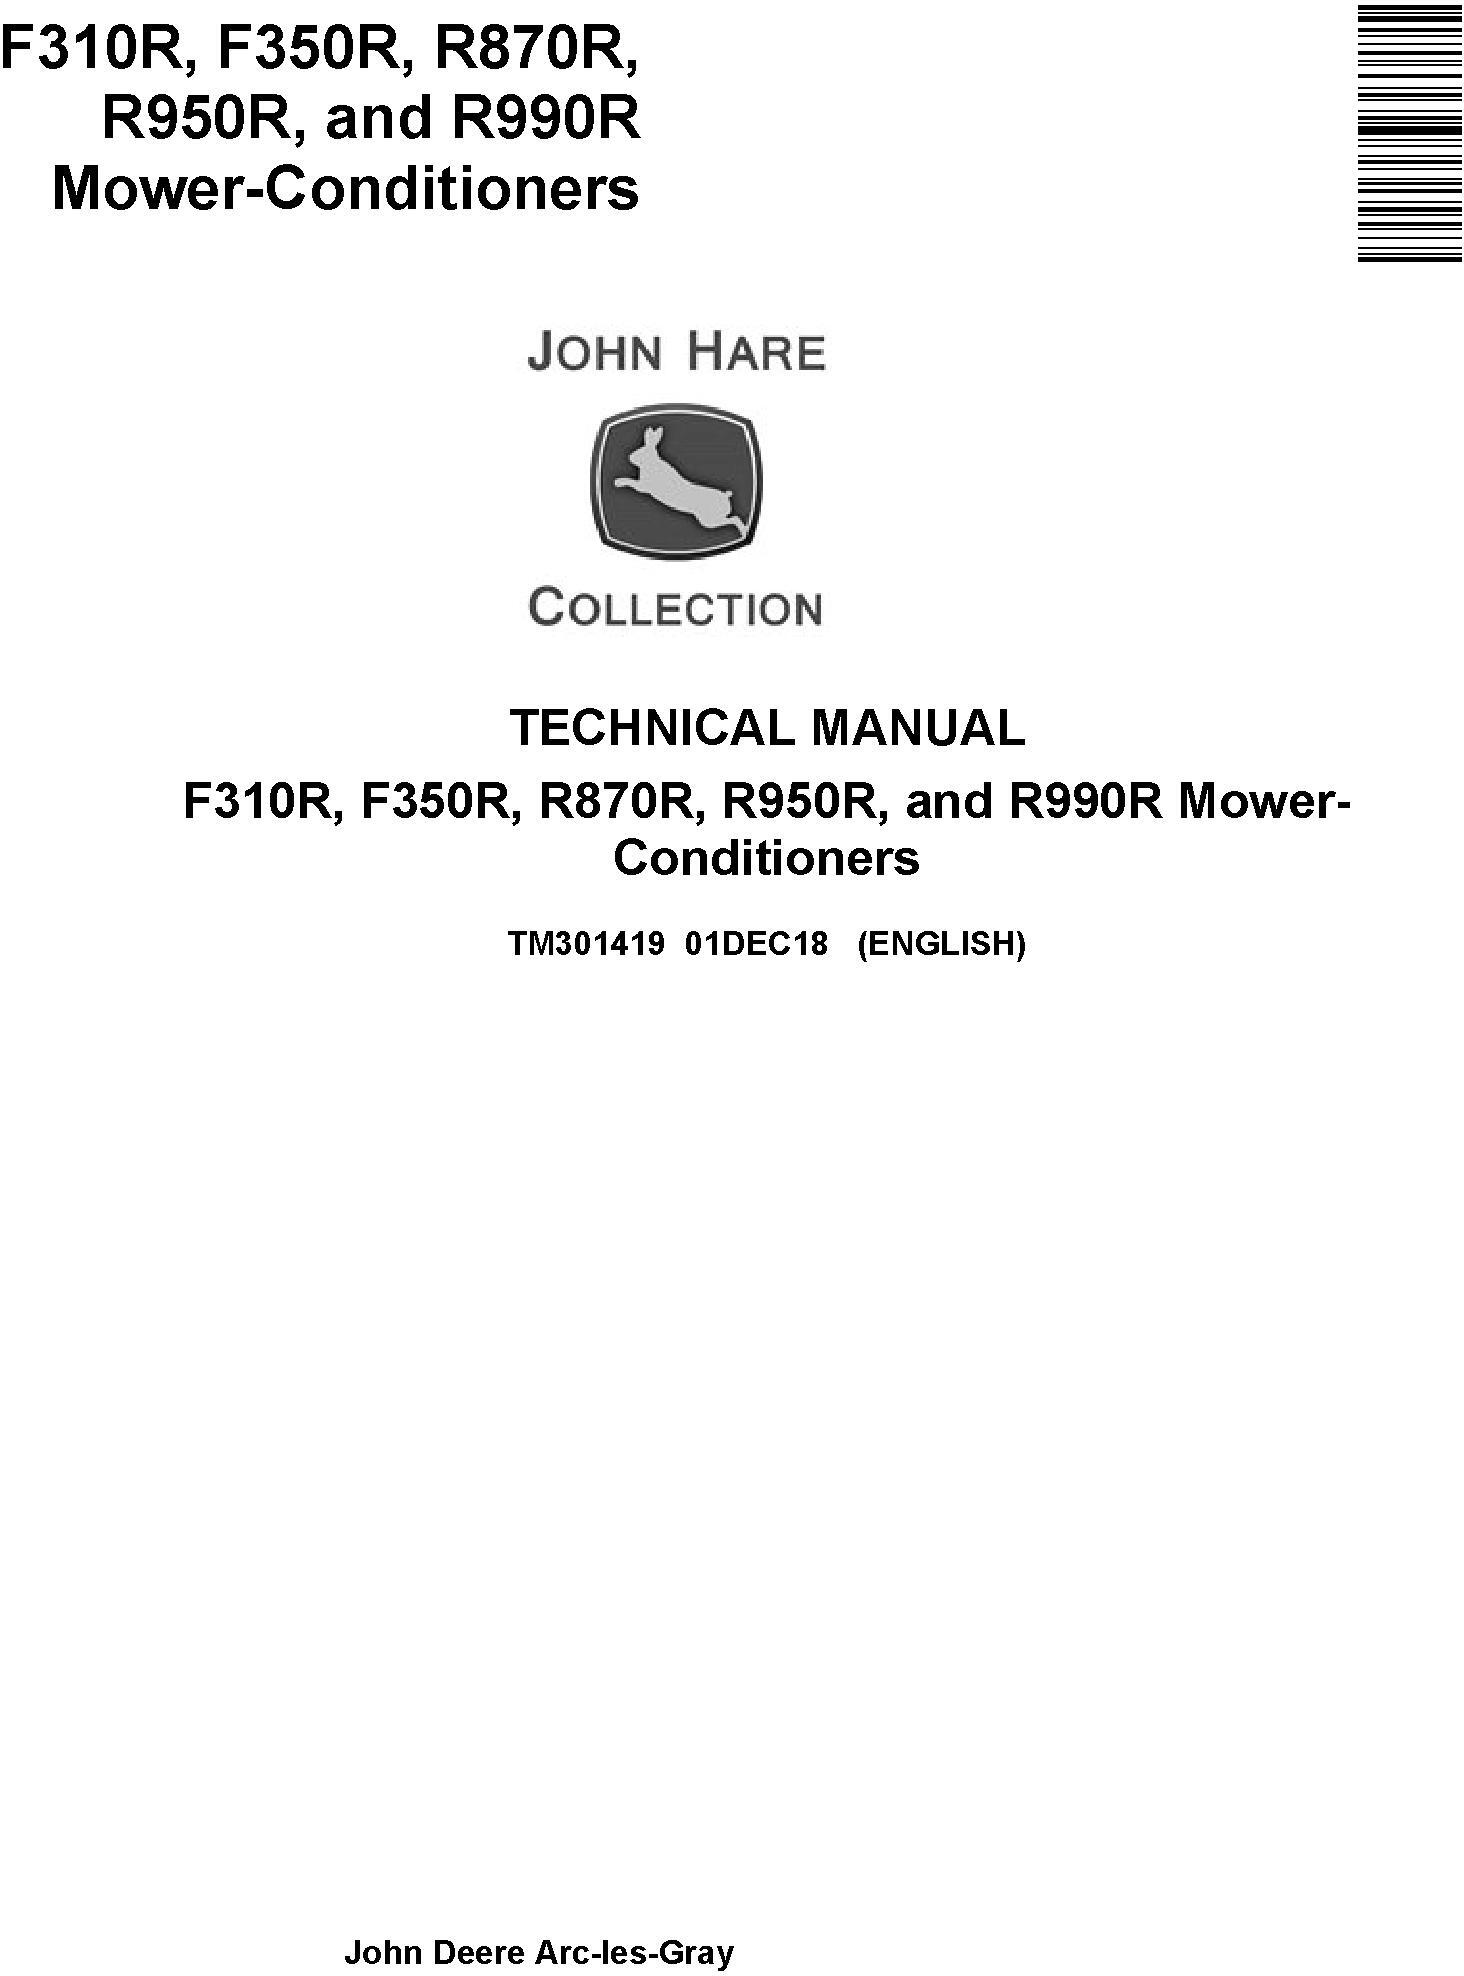 John Deere F310R F350R R870R R950R R990R Mower-Conditioners Technical Manual TM301419